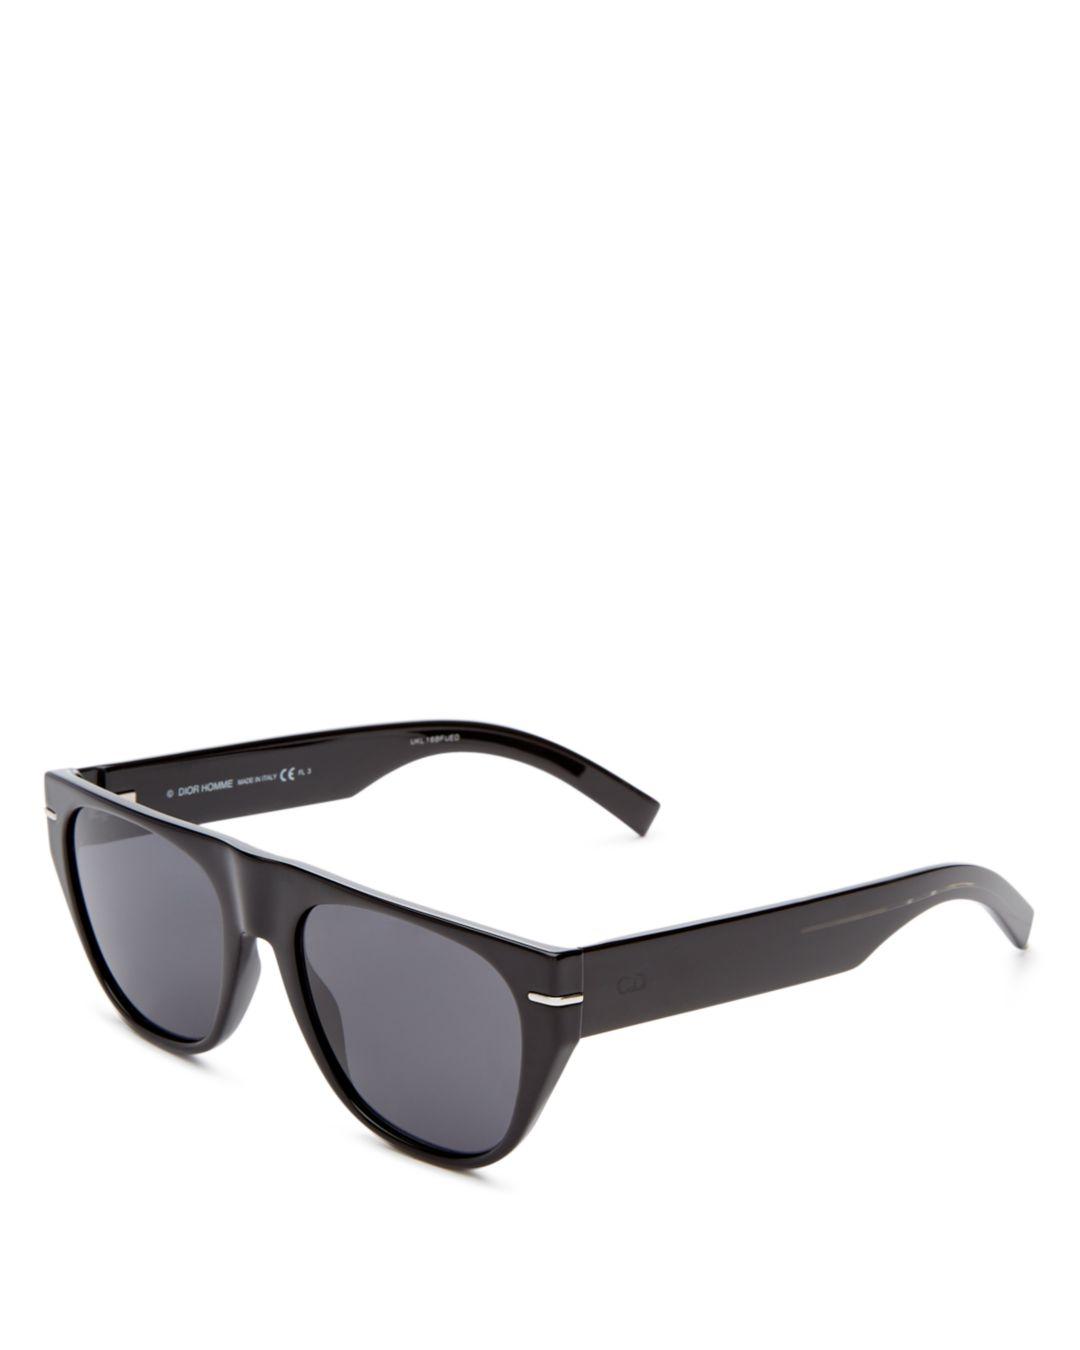 Dior Homme Men's Black Tie Flat Top Square Sunglasses for Men - Lyst